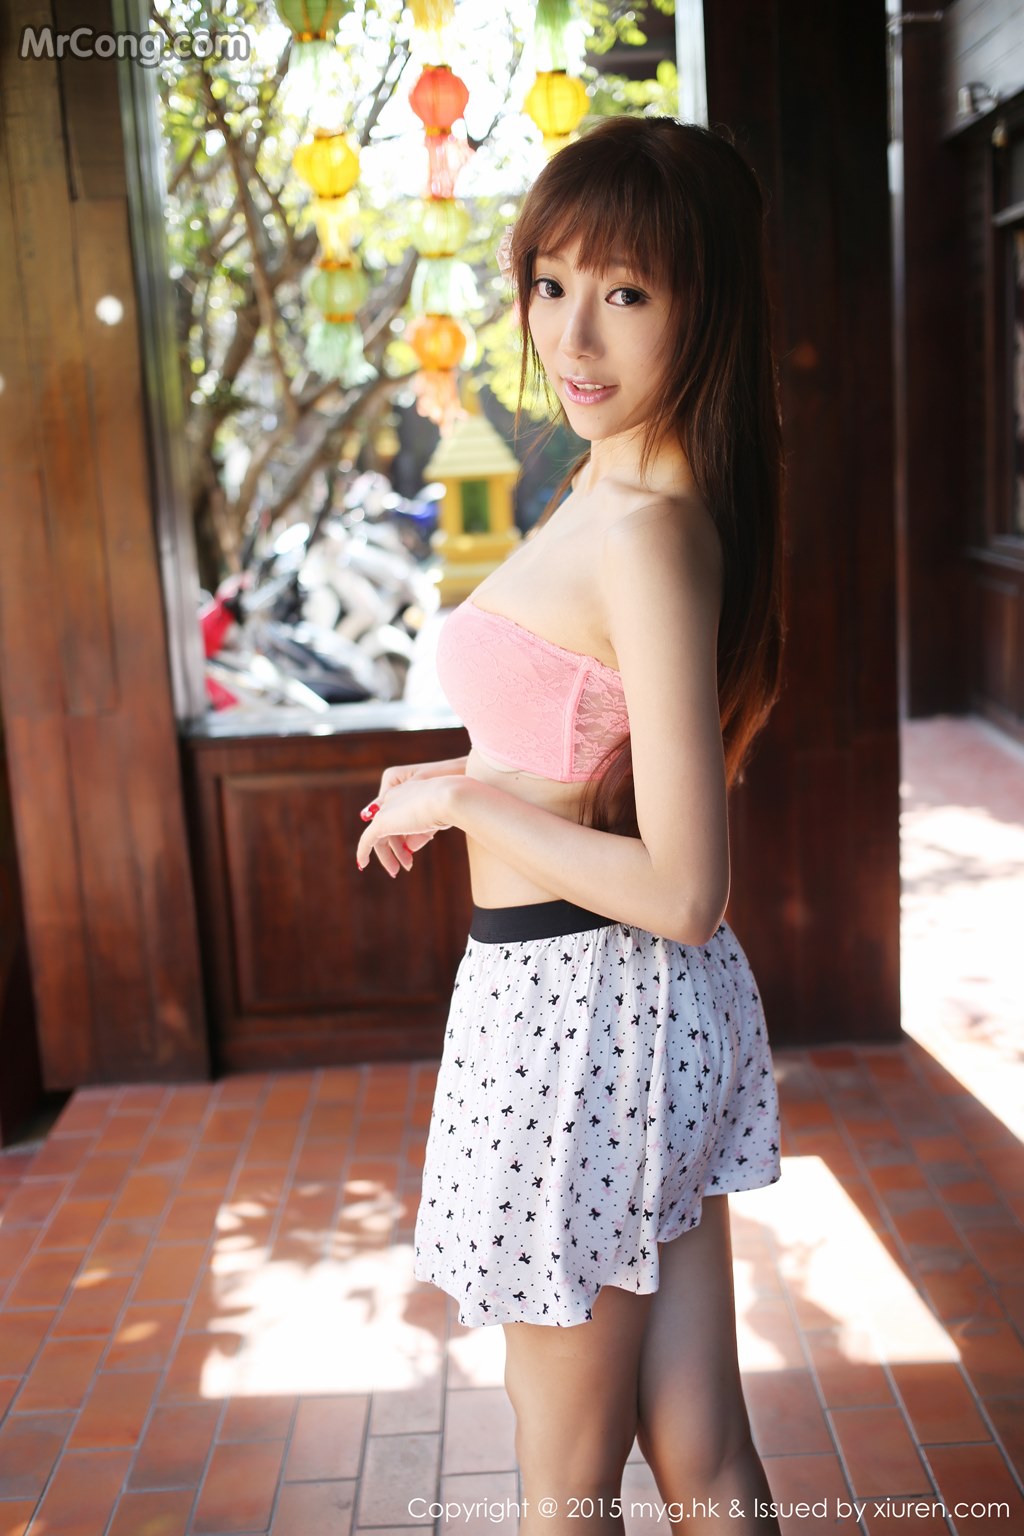 MyGirl Vol.098: Model Yanni (王馨瑶) (74 photos) photo 3-19